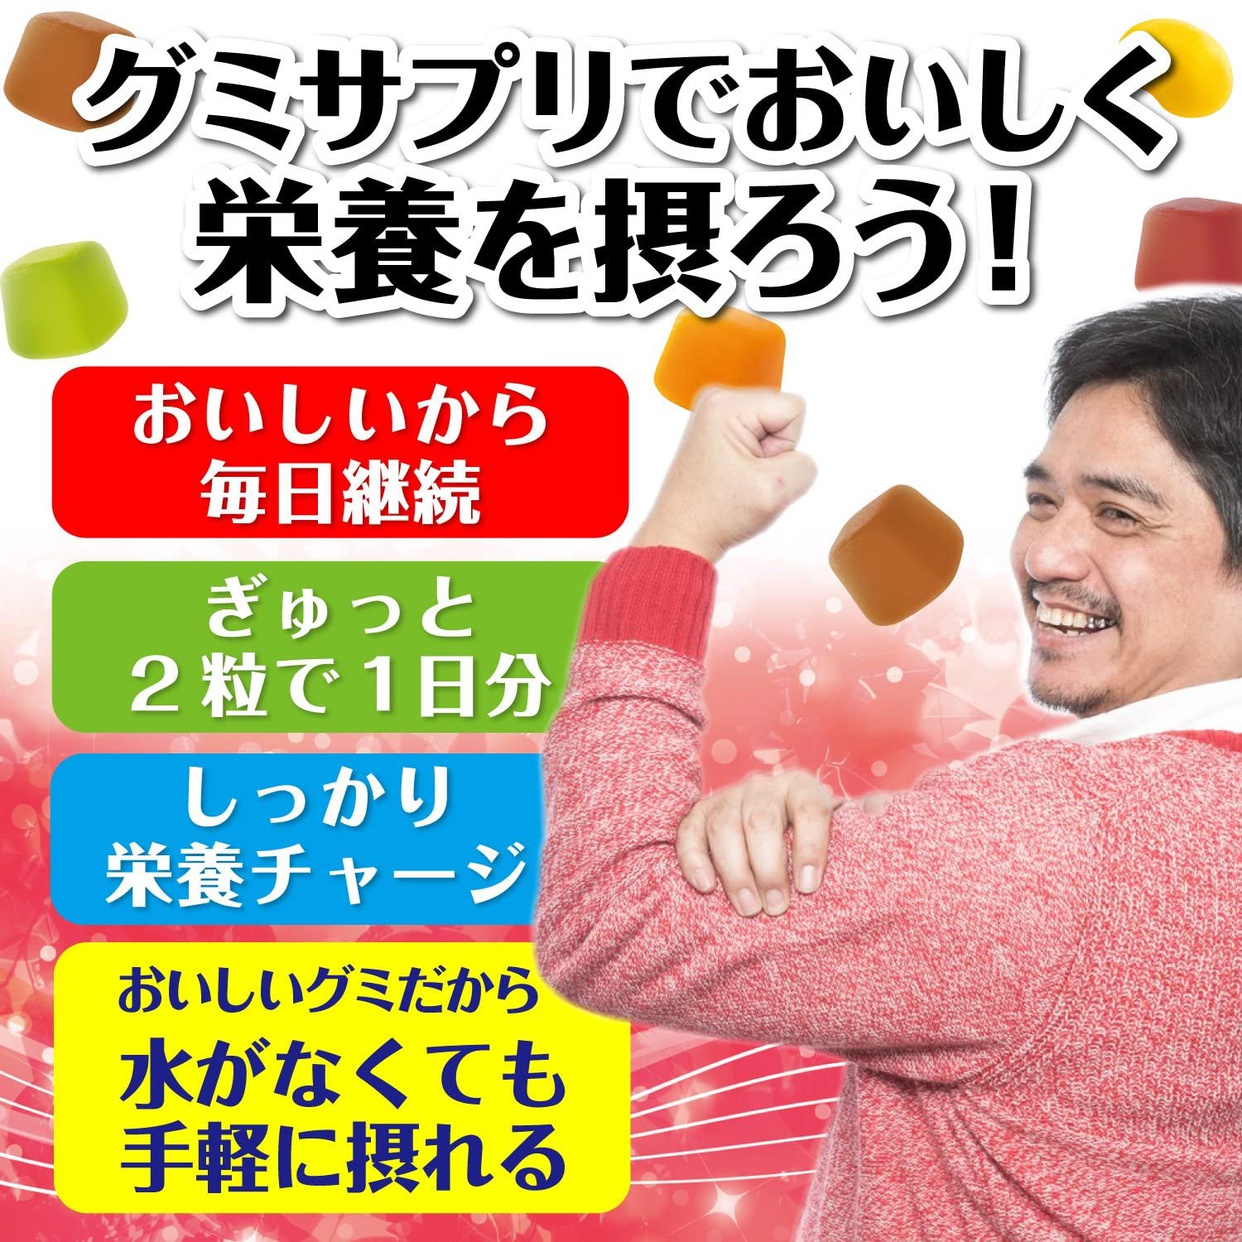 UHA味覚糖 グミサプリ 亜鉛&マカの商品画像5 